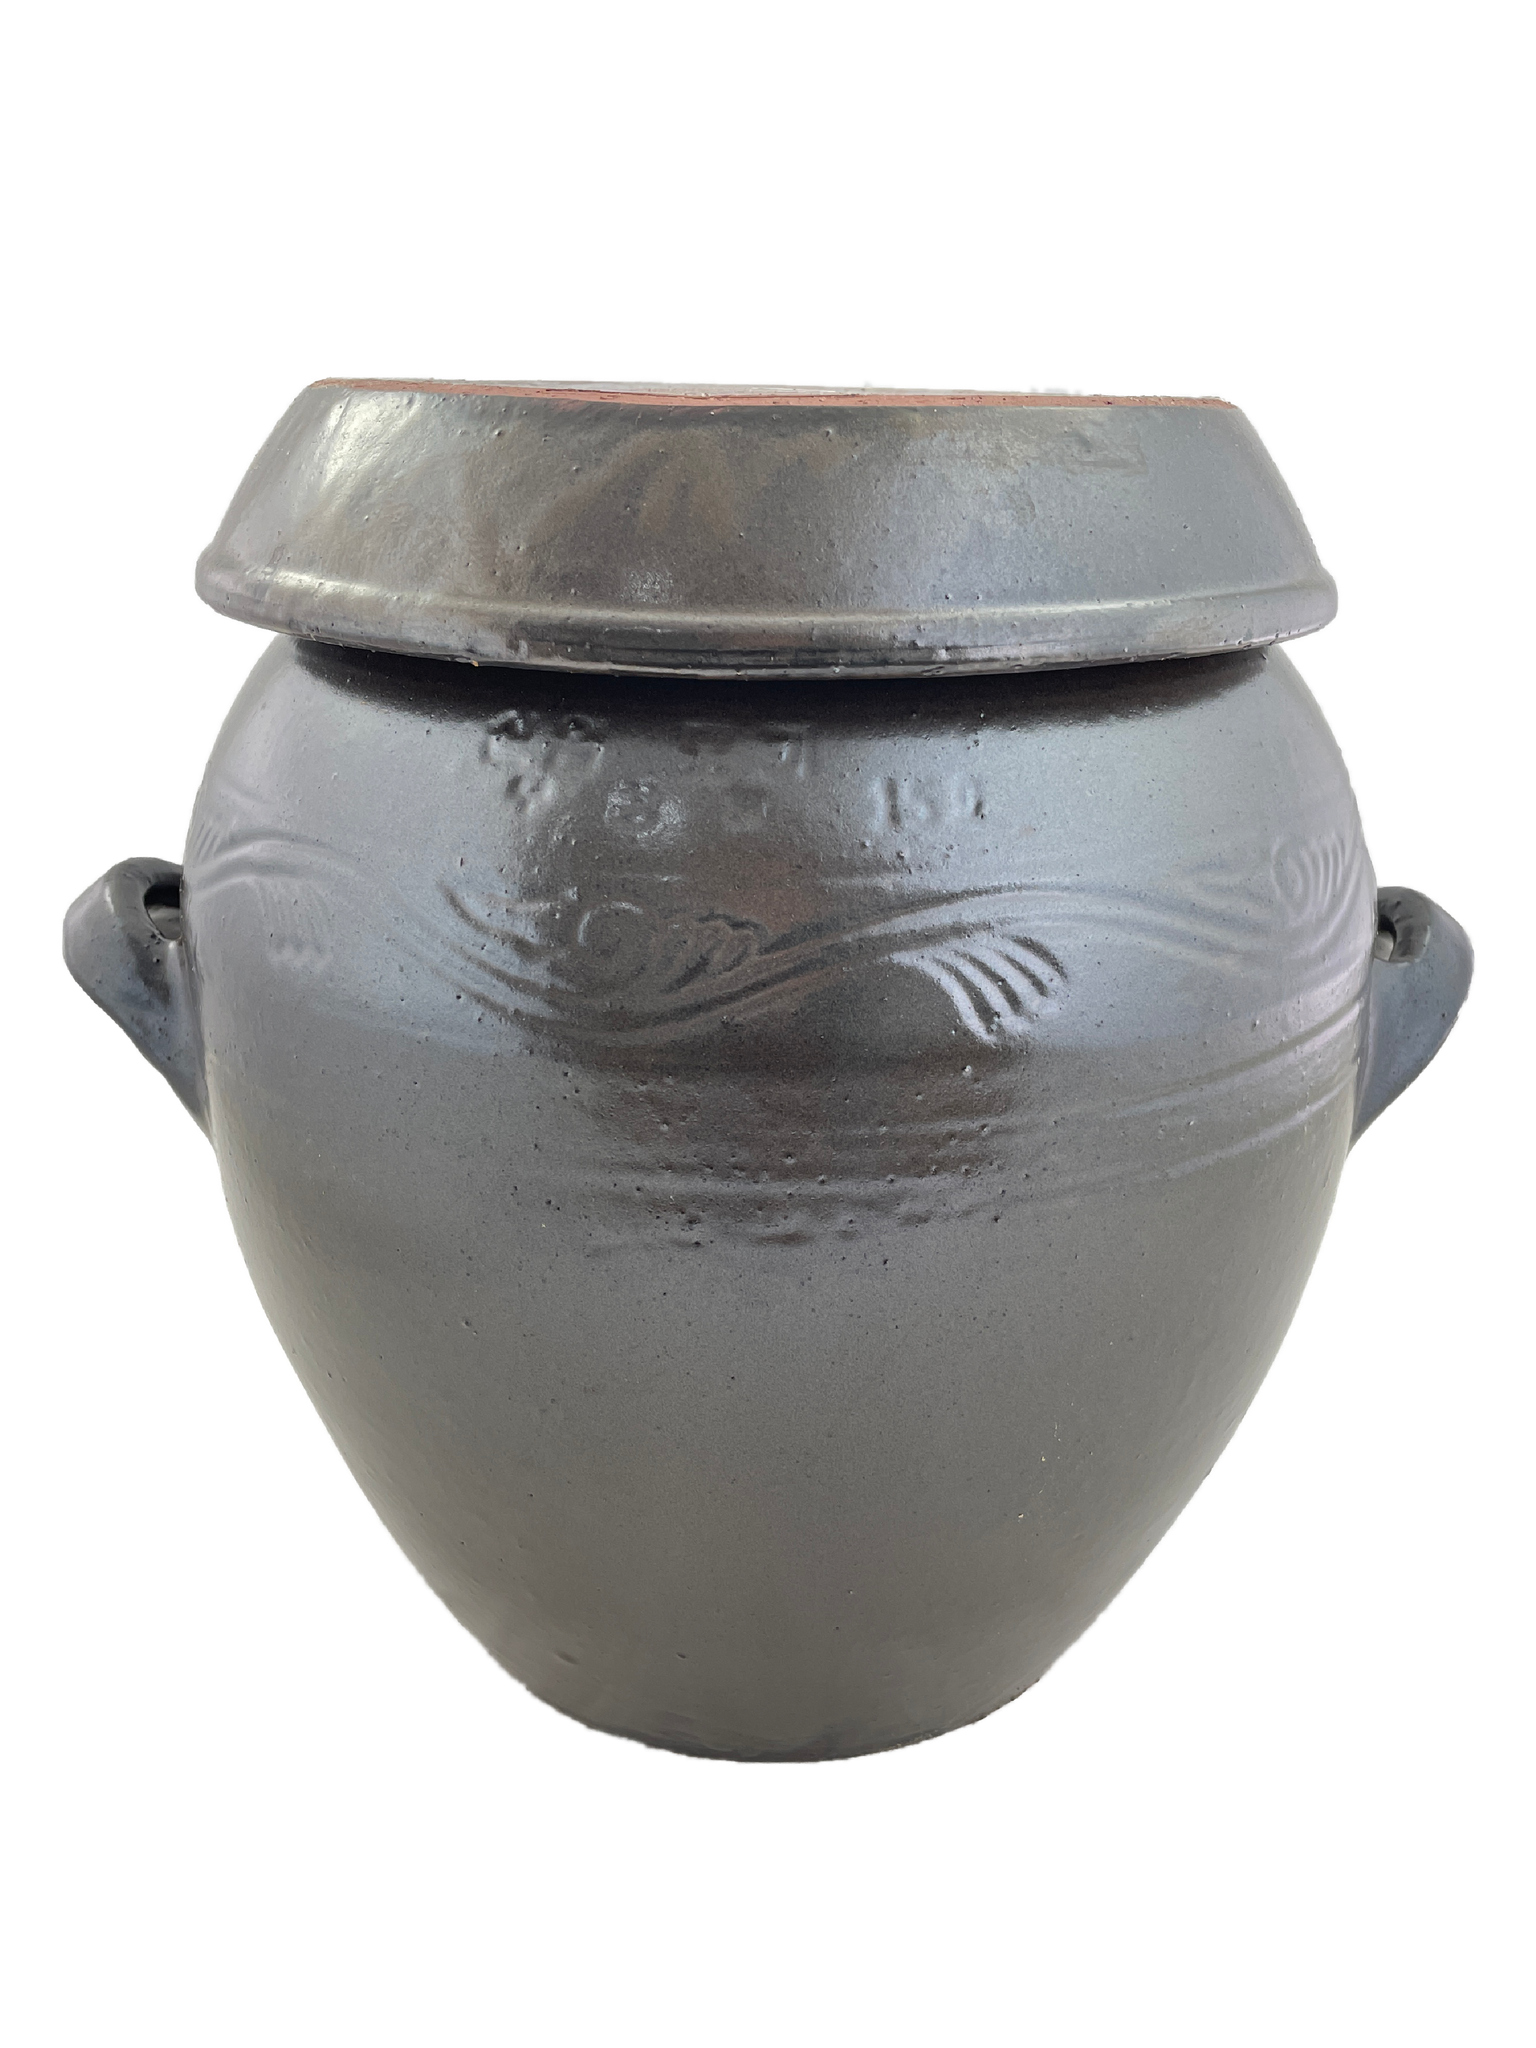 Korean Clay Pottery with Lid, Onggi Hangari 옹기 항아리